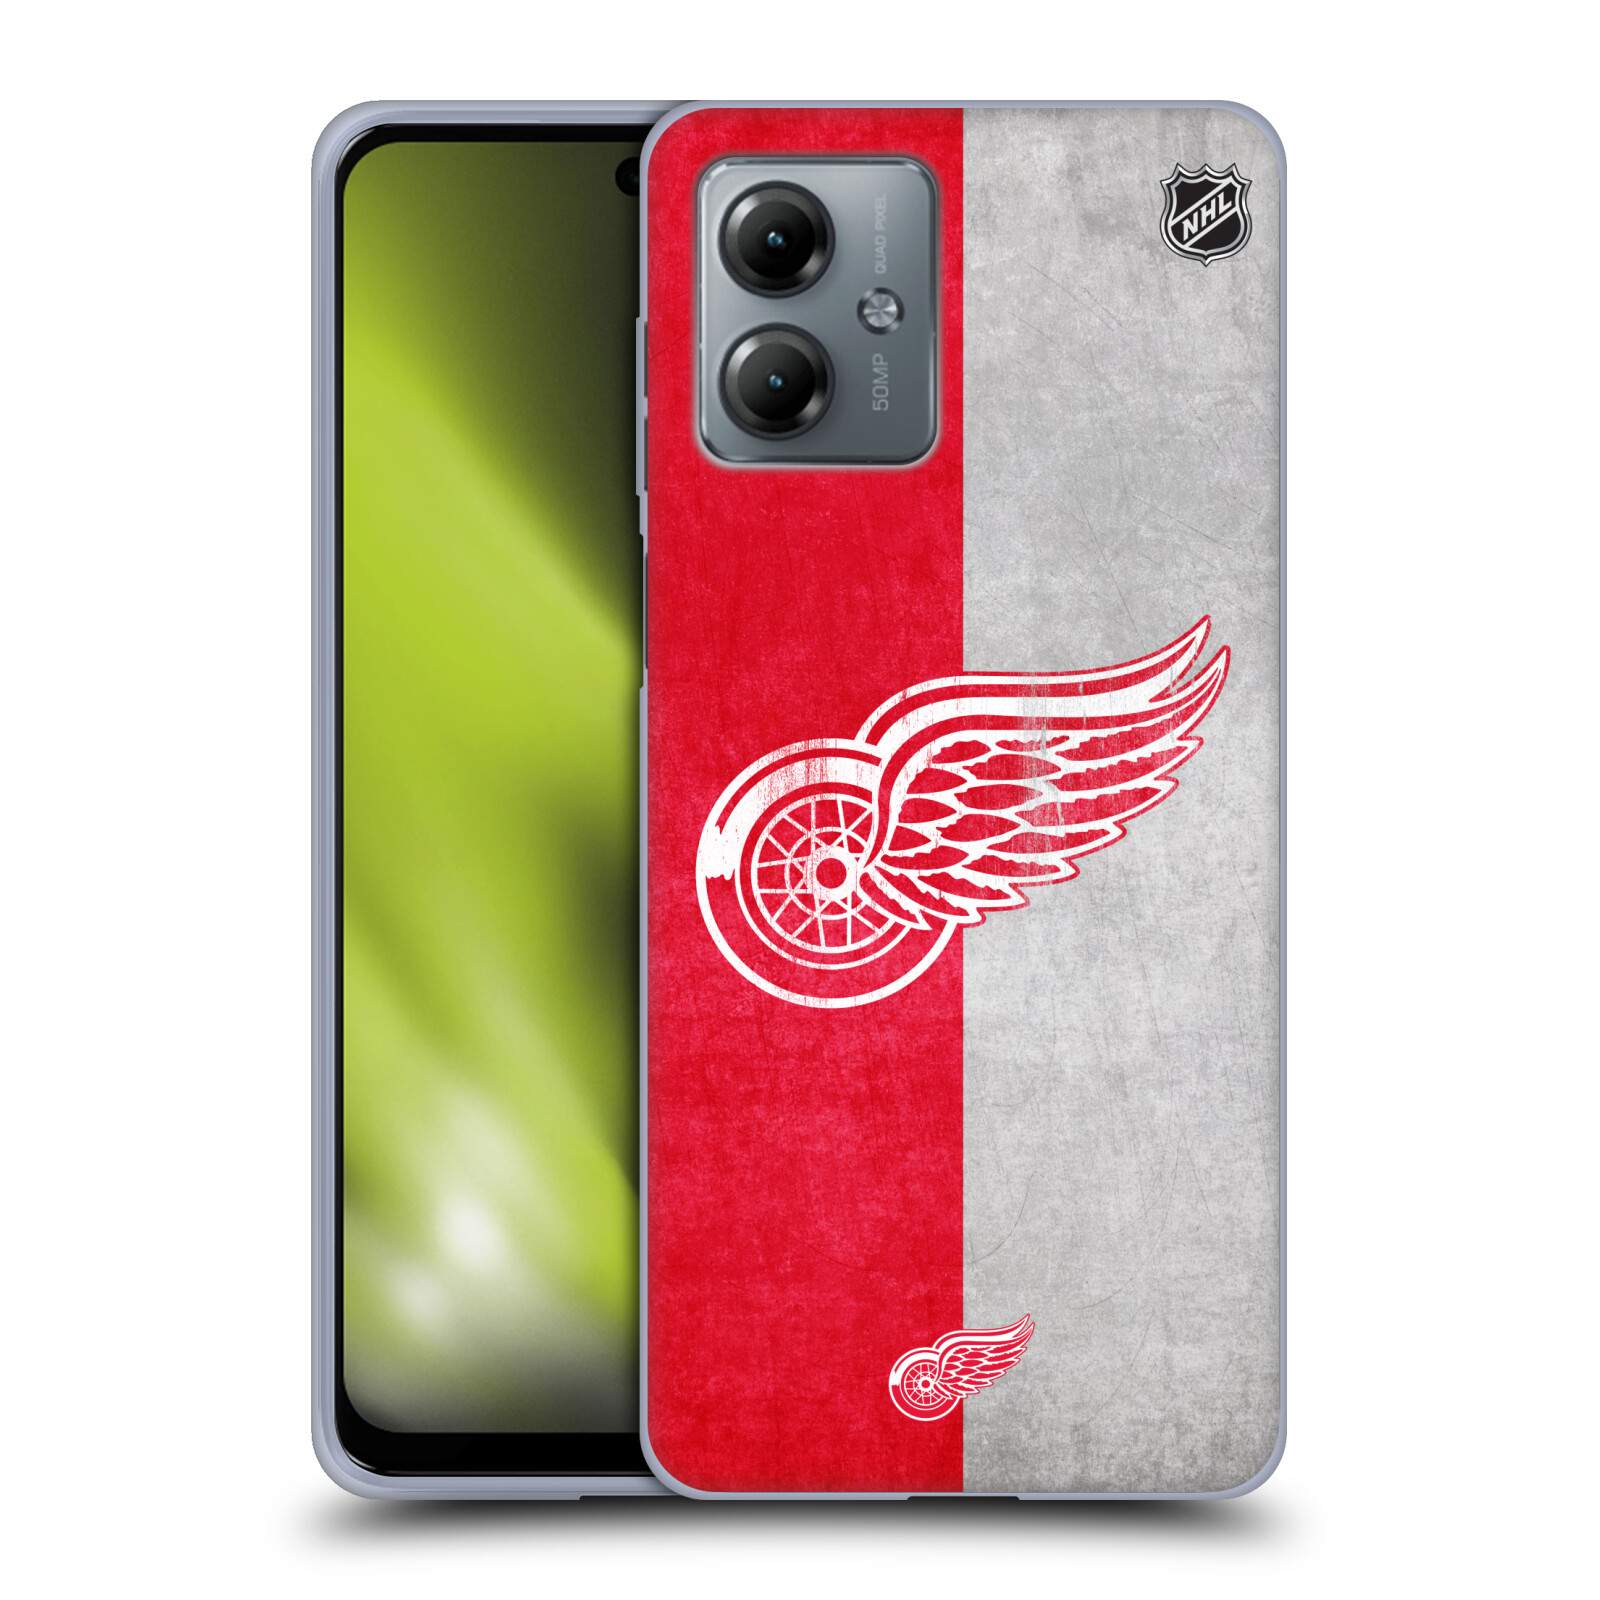 Silikonové pouzdro na mobil Motorola Moto G14 - NHL - Půlené logo Detroit Red Wings (Silikonový kryt, obal, pouzdro na mobilní telefon Motorola Moto G14 s licencovaným motivem NHL - Půlené logo Detroit Red Wings)